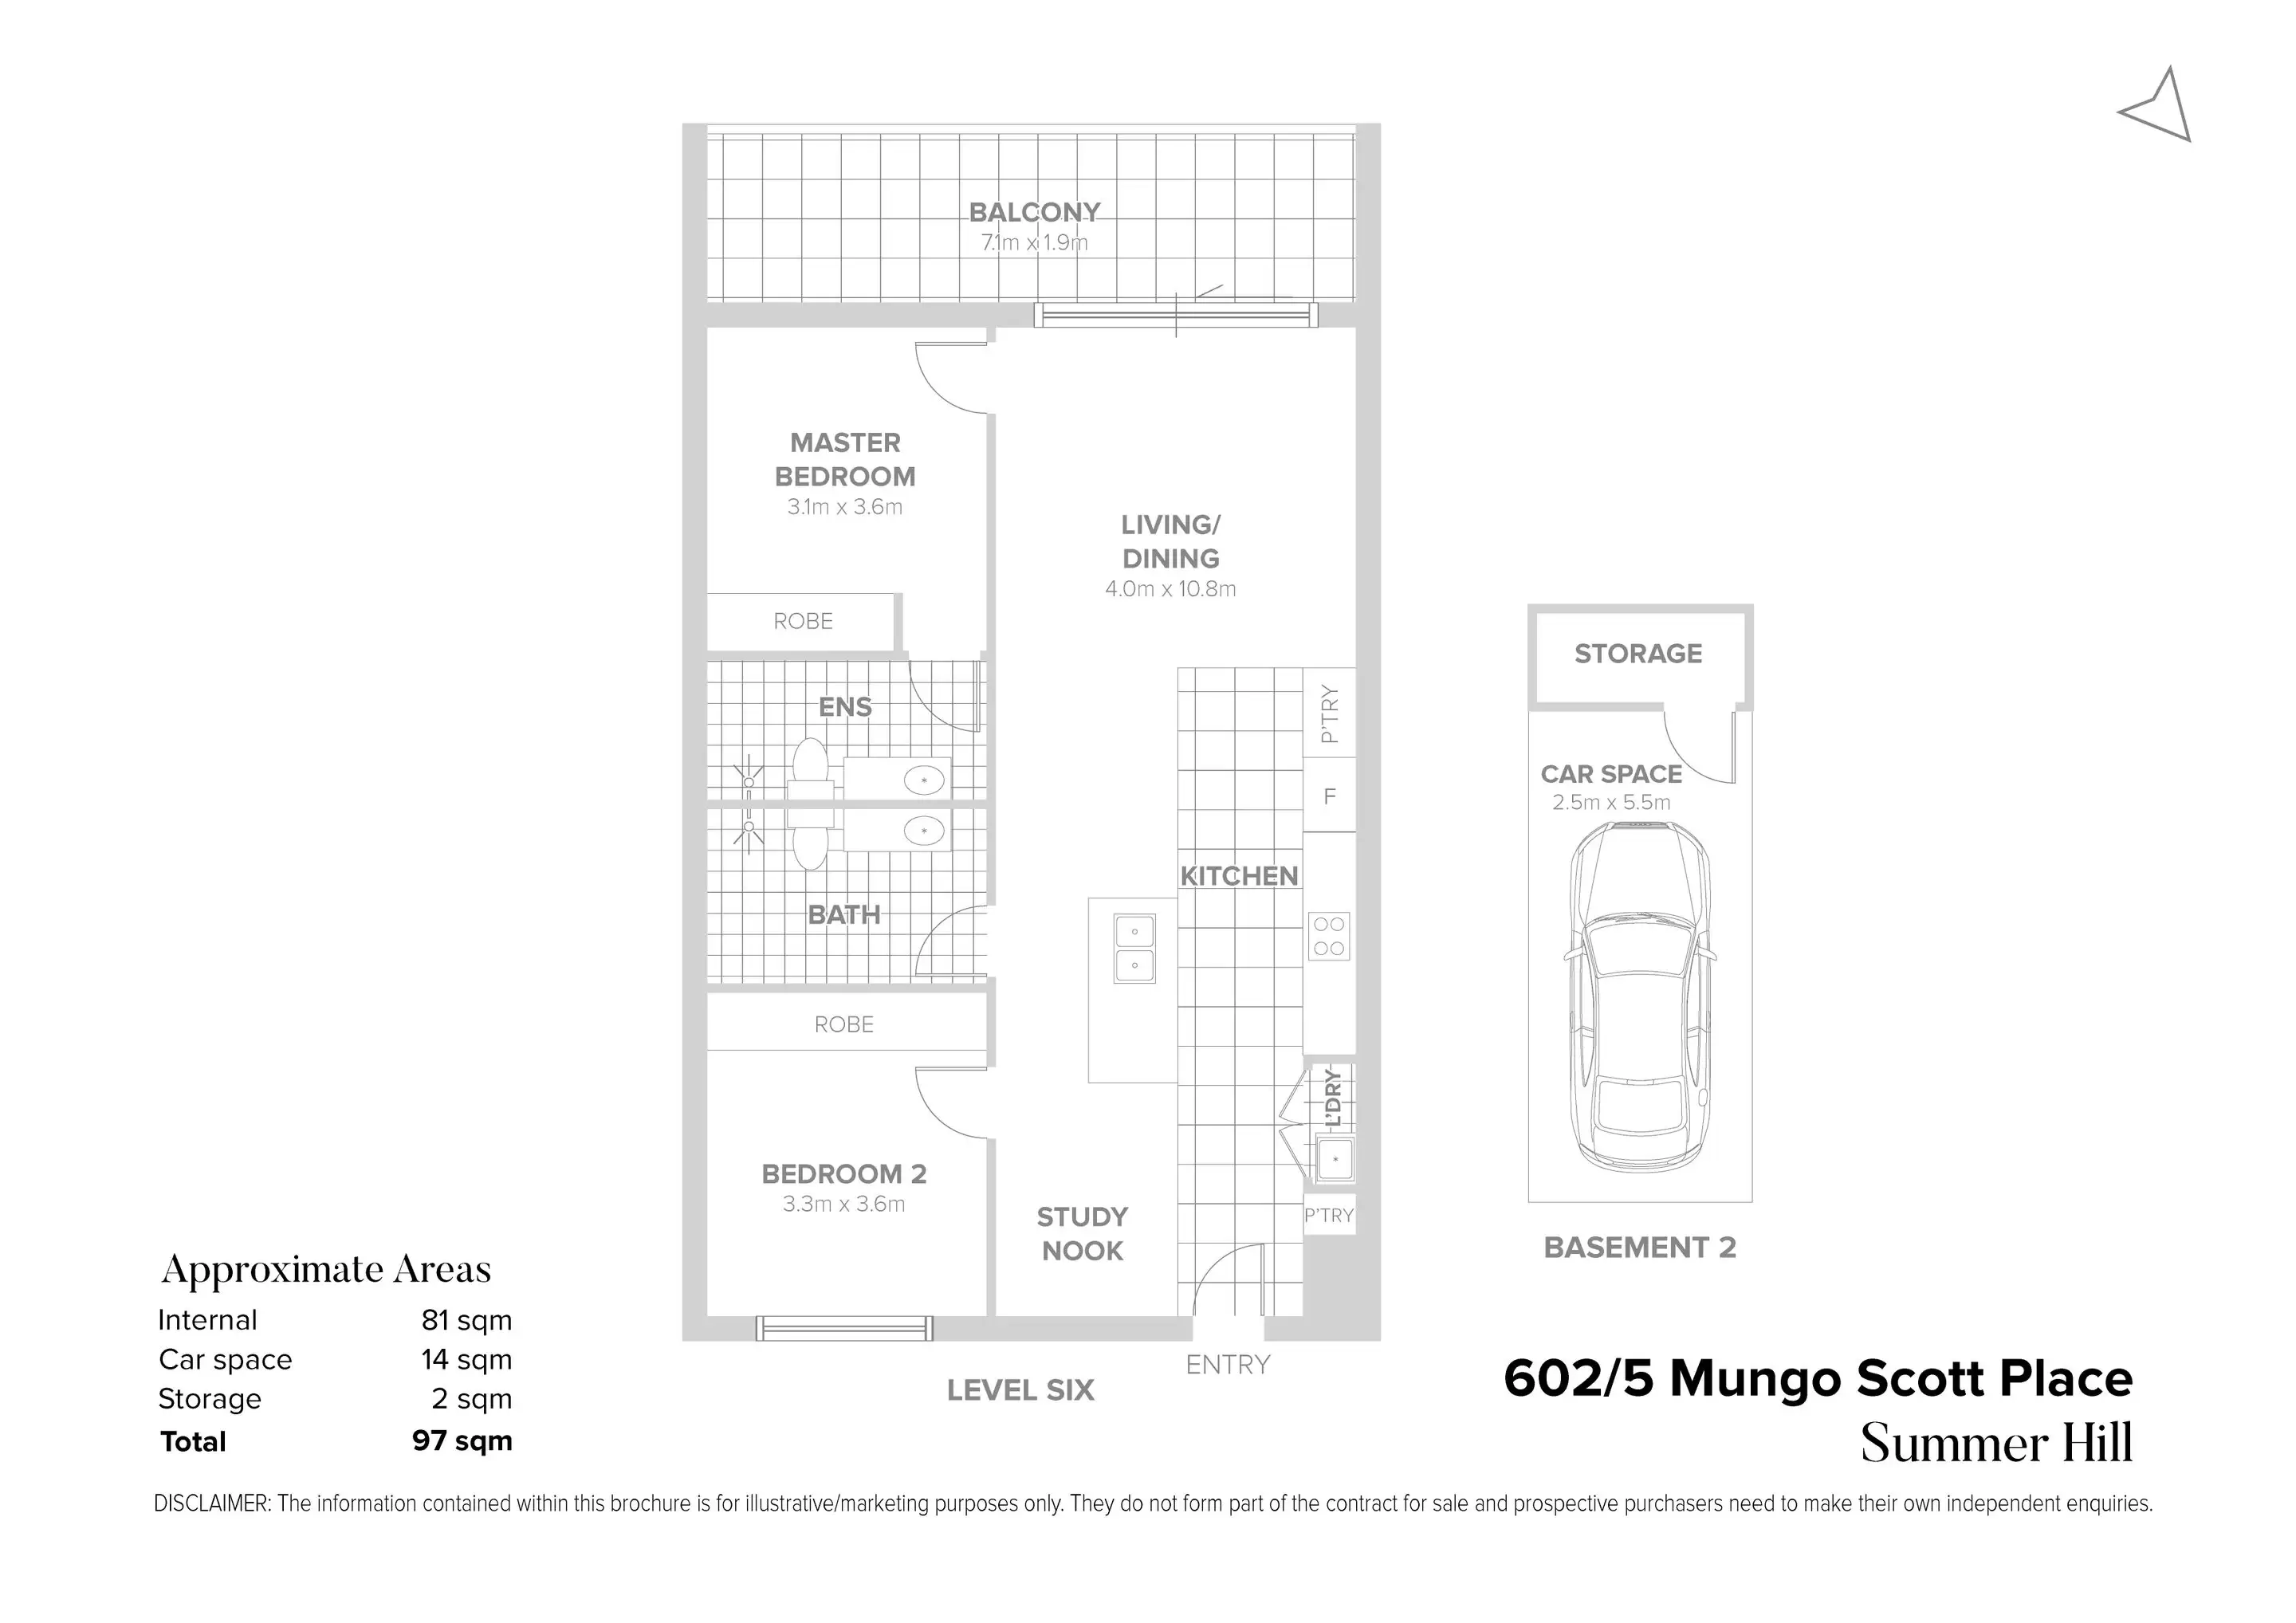 602/5 Mungo Scott Place, Summer Hill Sold by Chidiac Realty - floorplan